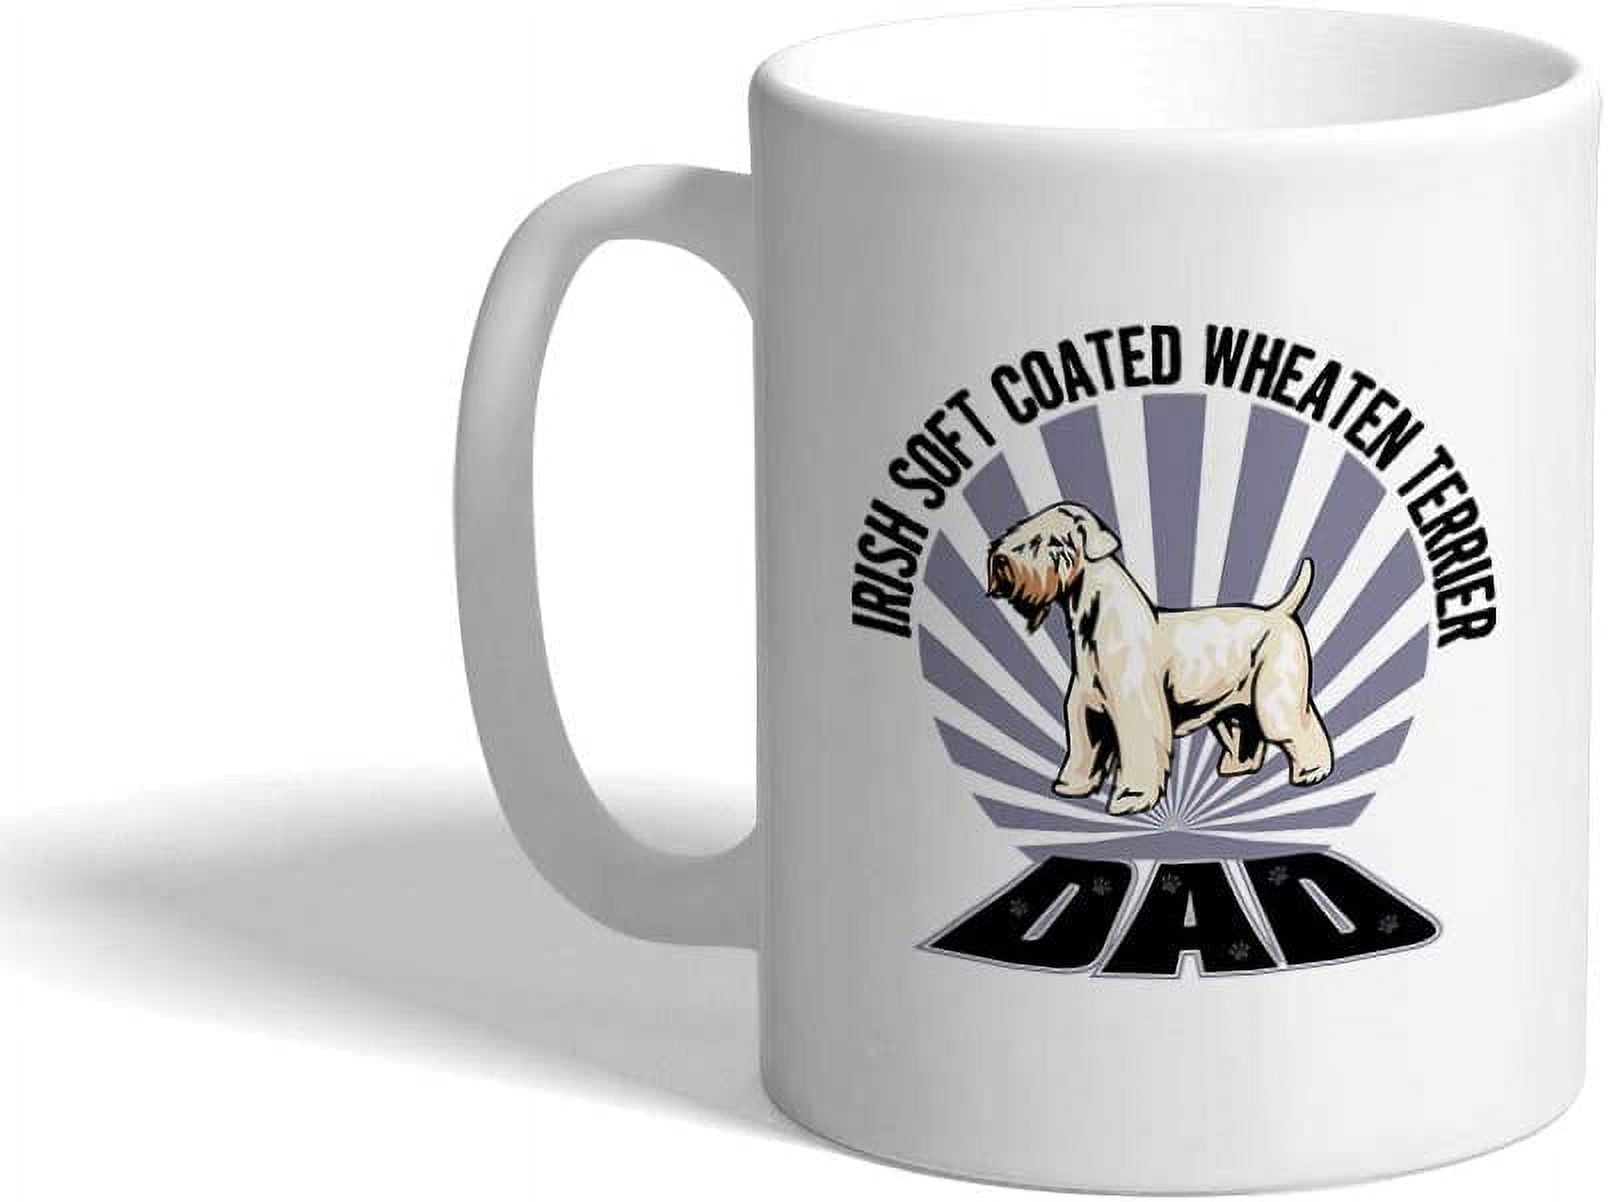 Irish Terrier Love Coffee Mug